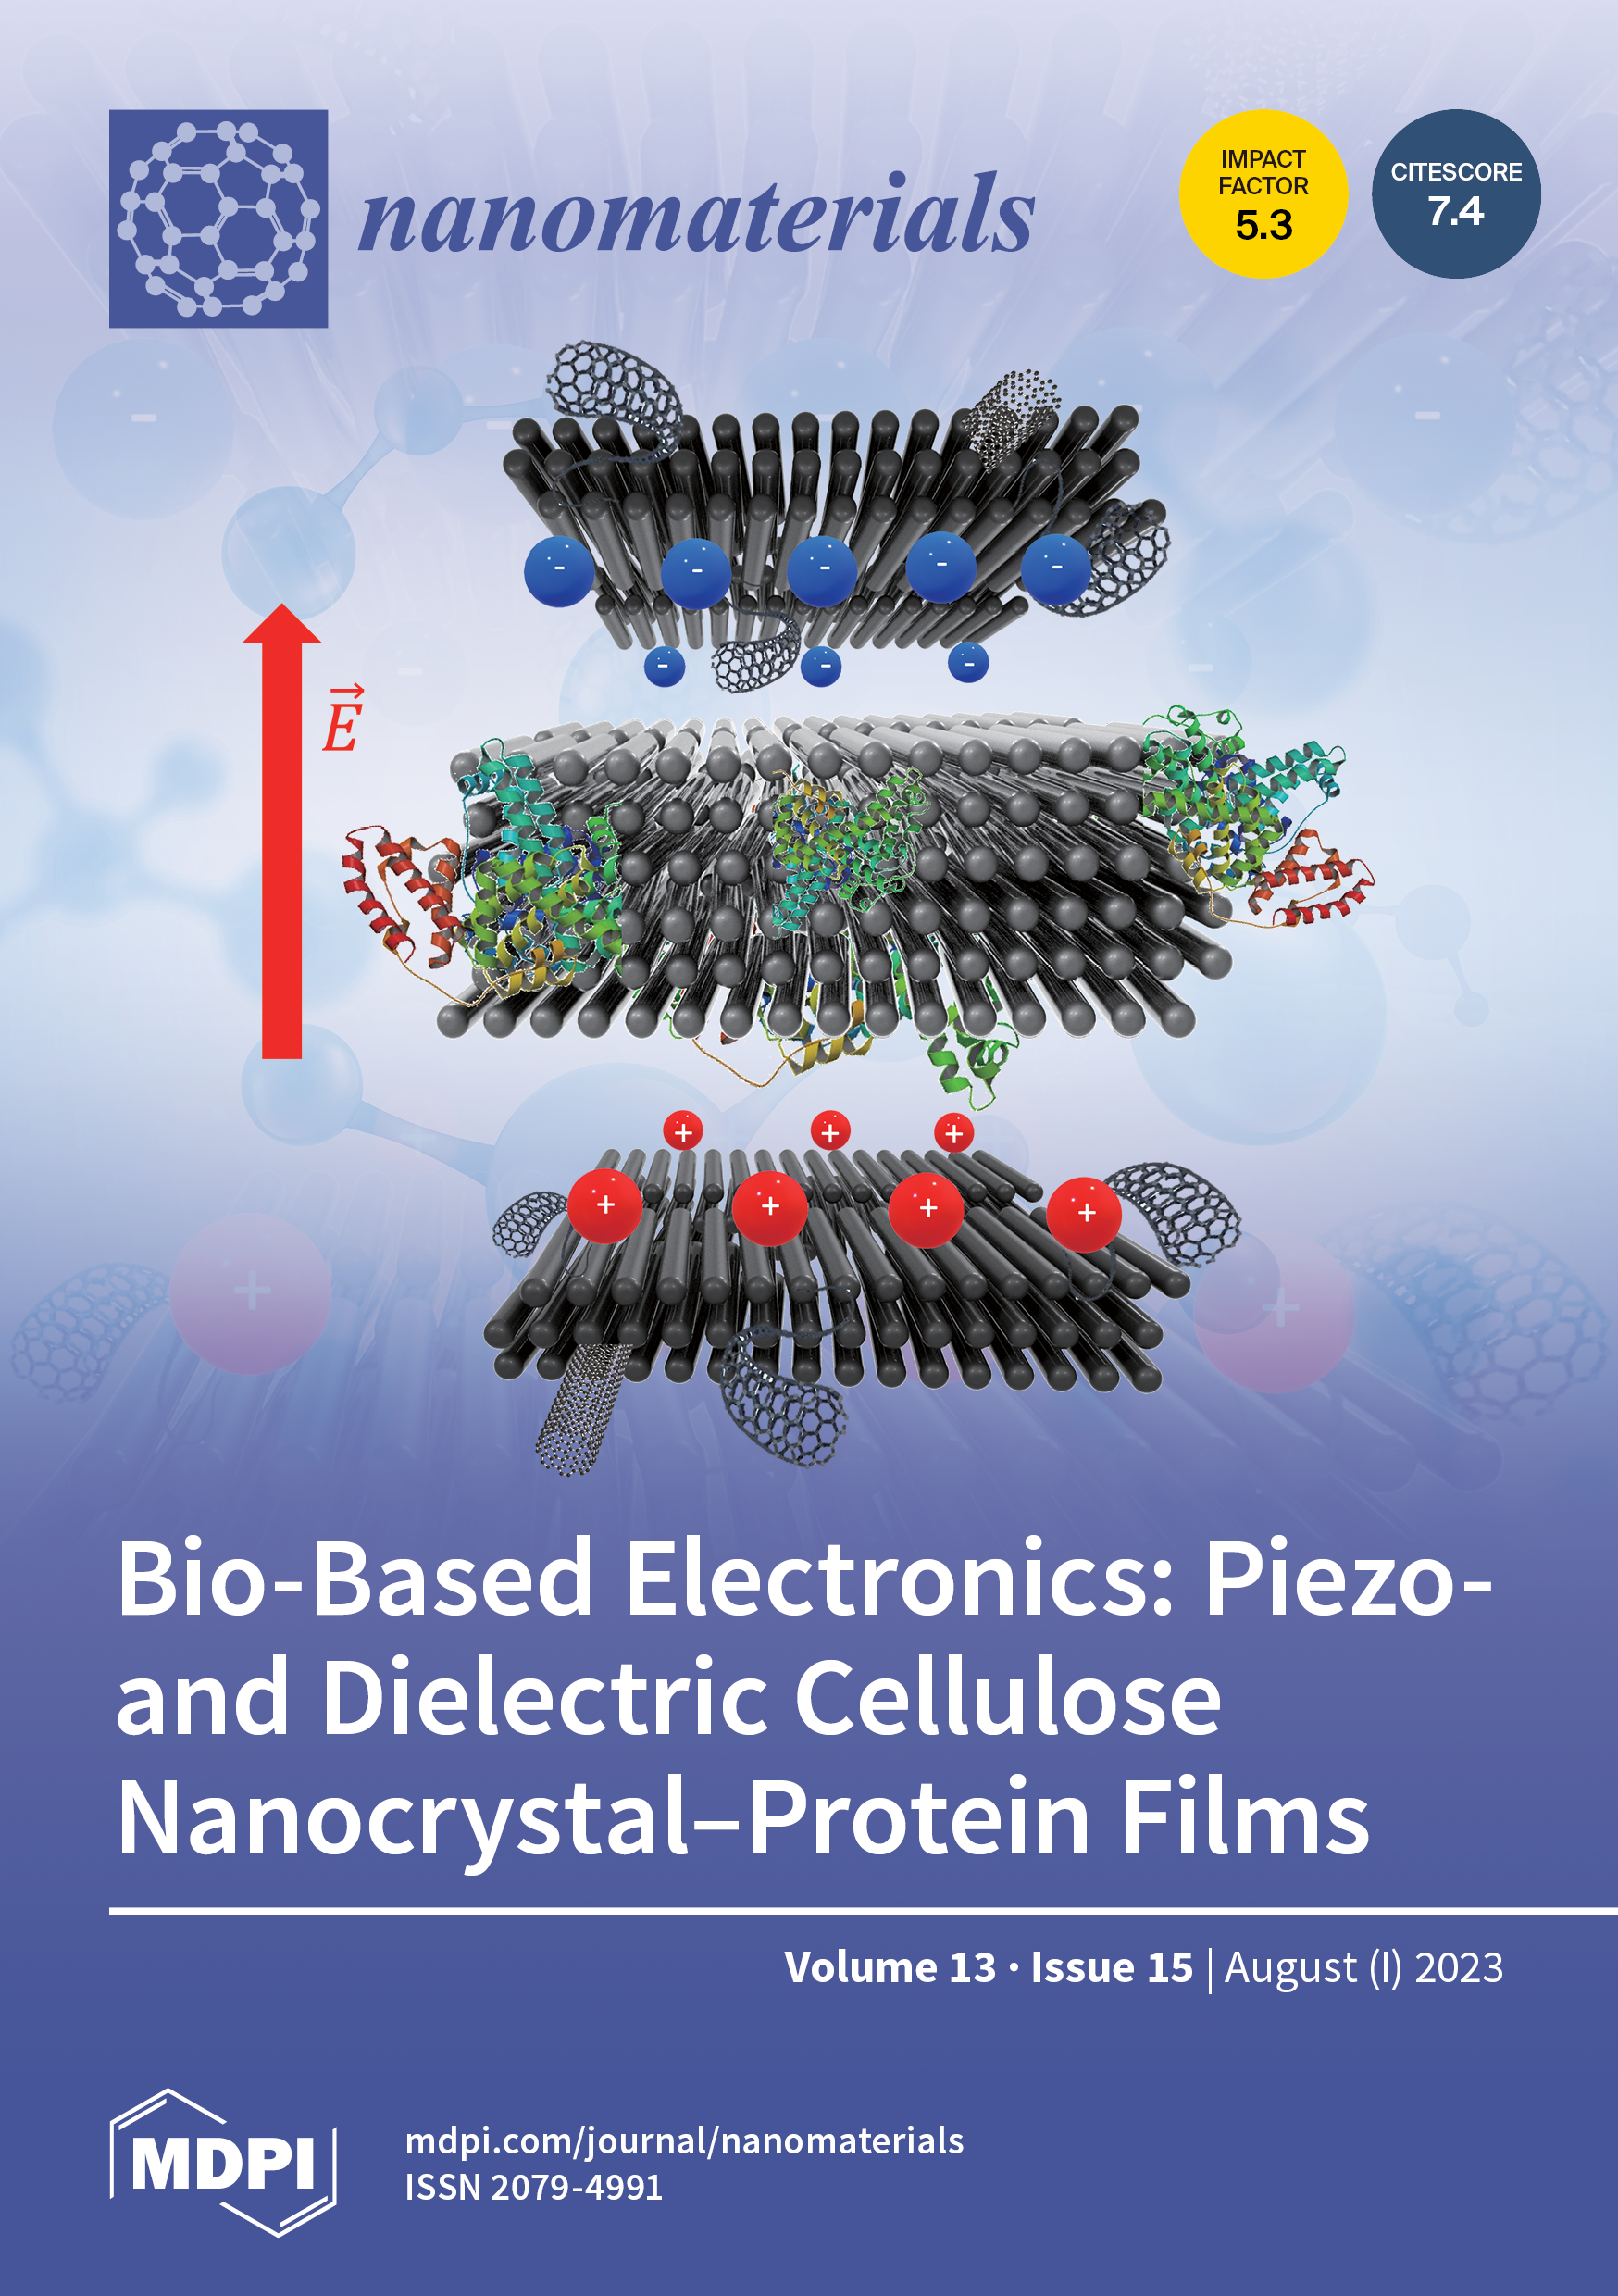 https://www.mdpi.com/files/uploaded/covers/nanomaterials/big_cover-nanomaterials-v13-i15.png